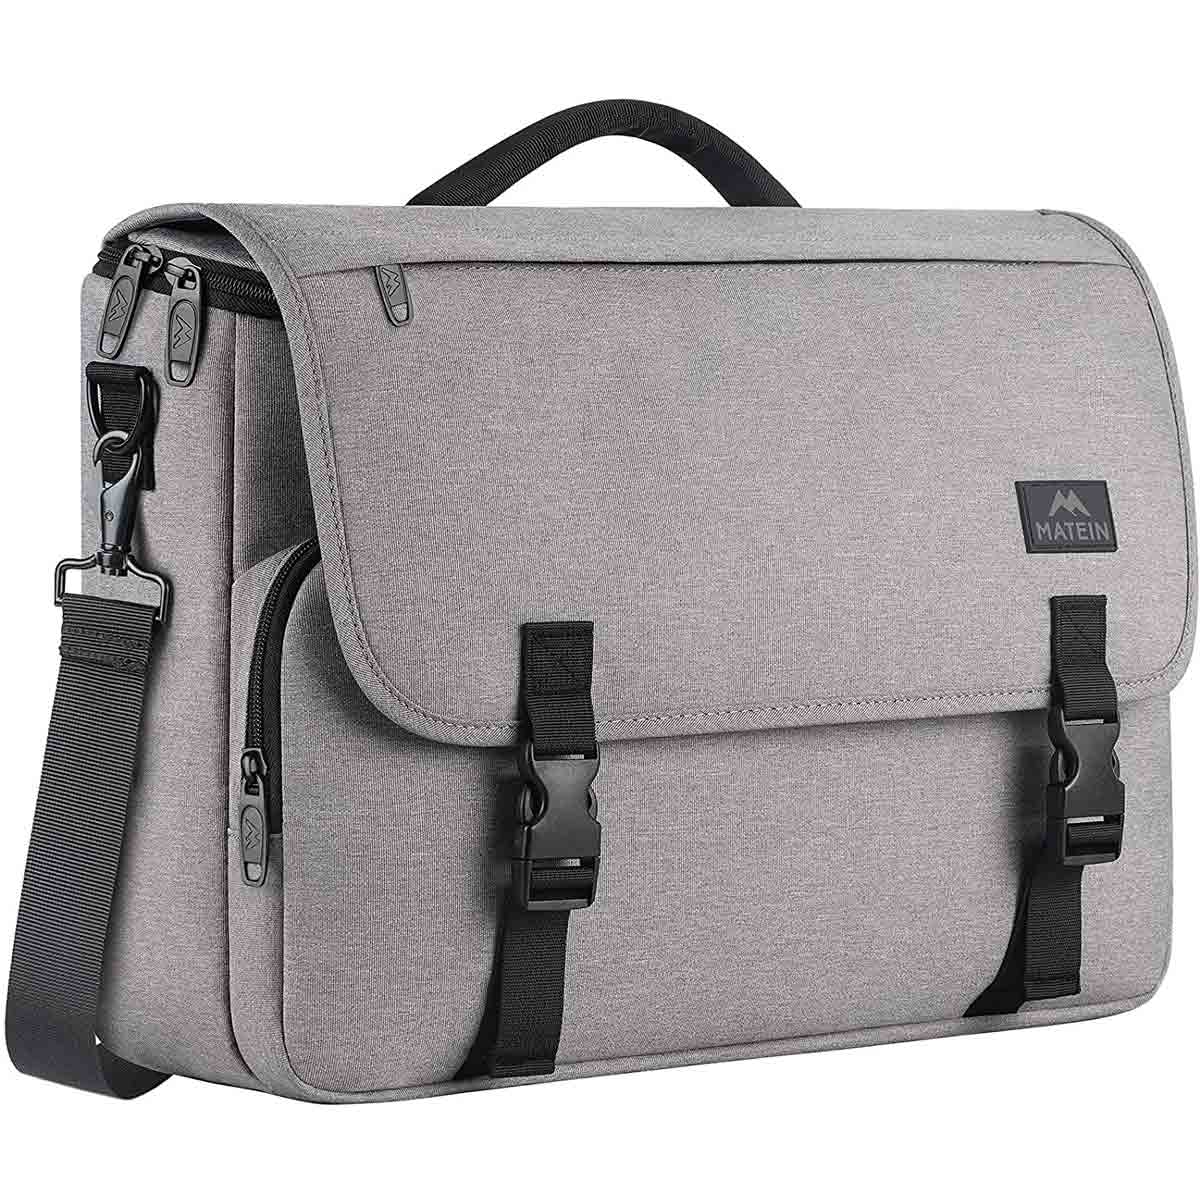 Matein laptop tote bag for work, laptop tote bag